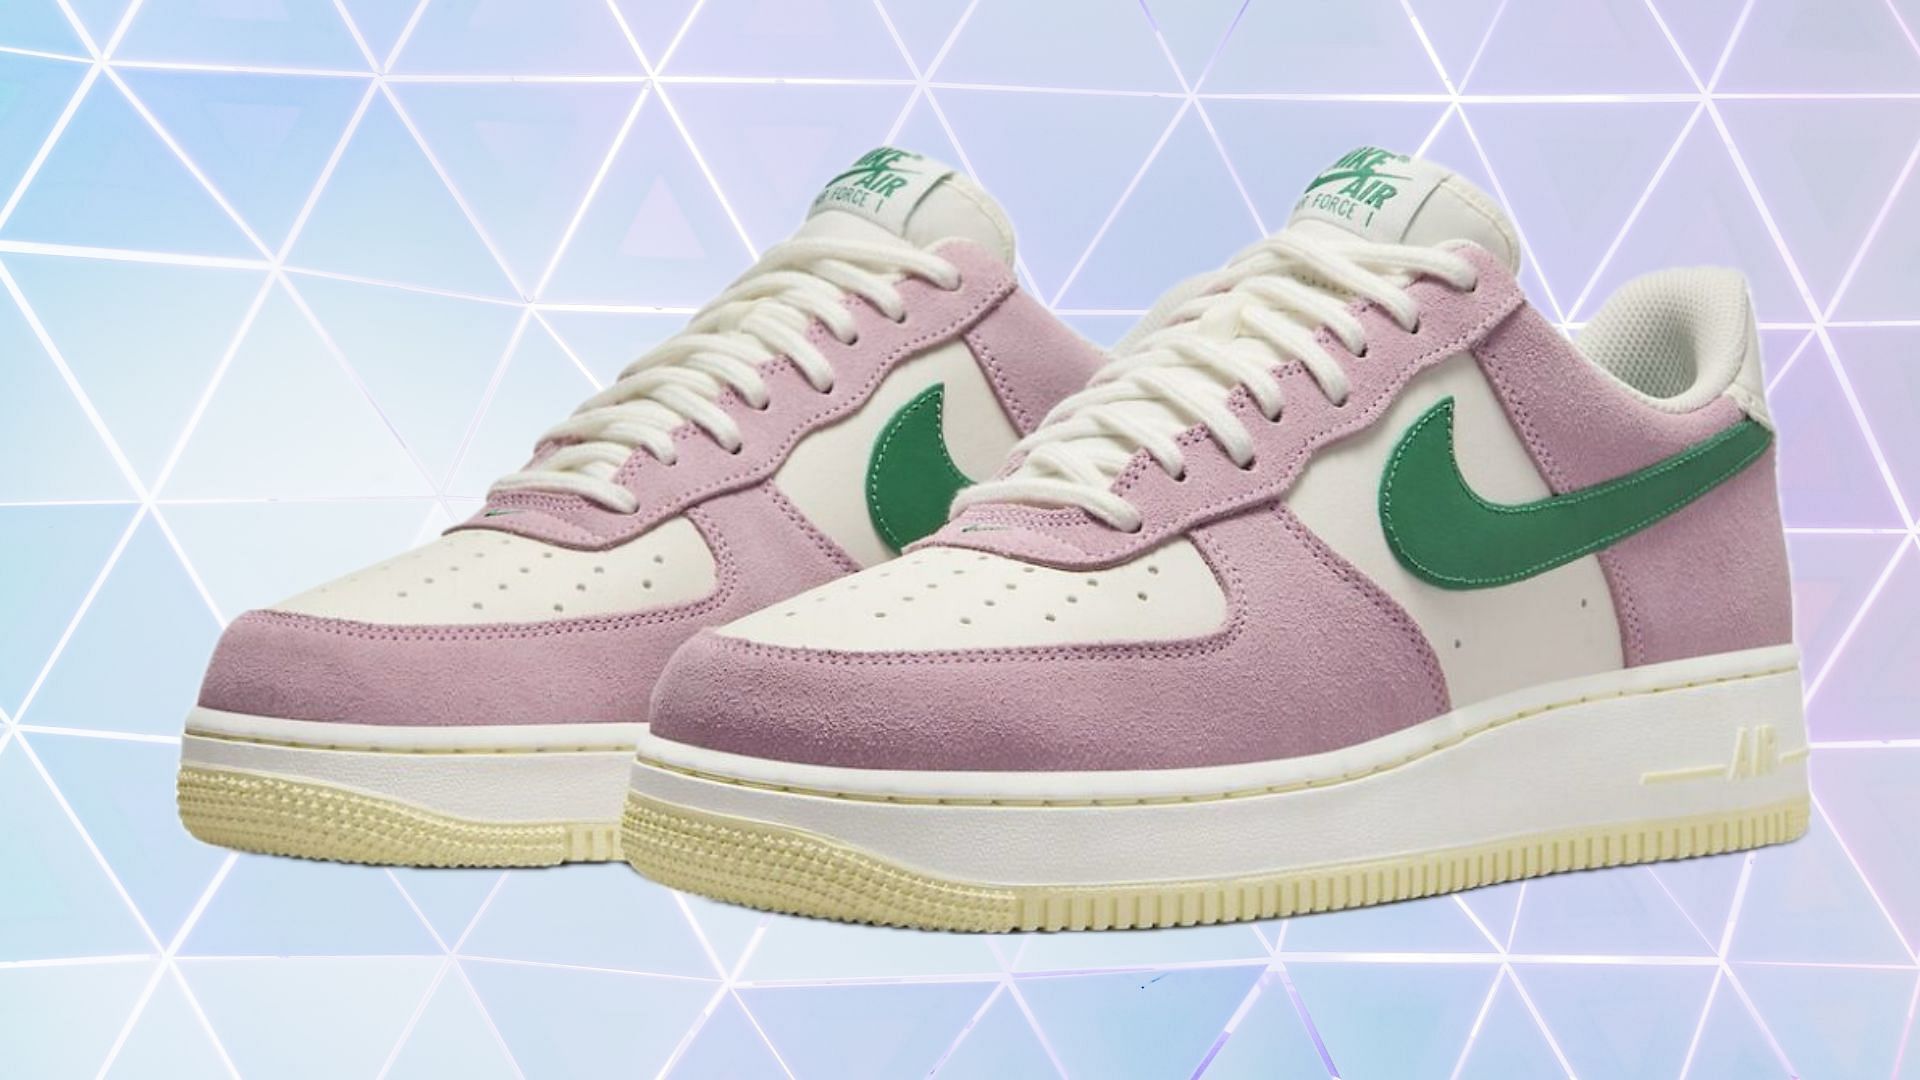 Nike Air Force 1 Low Soft Pink sneakers (Image via Twitter/@sneakerbardetroit)